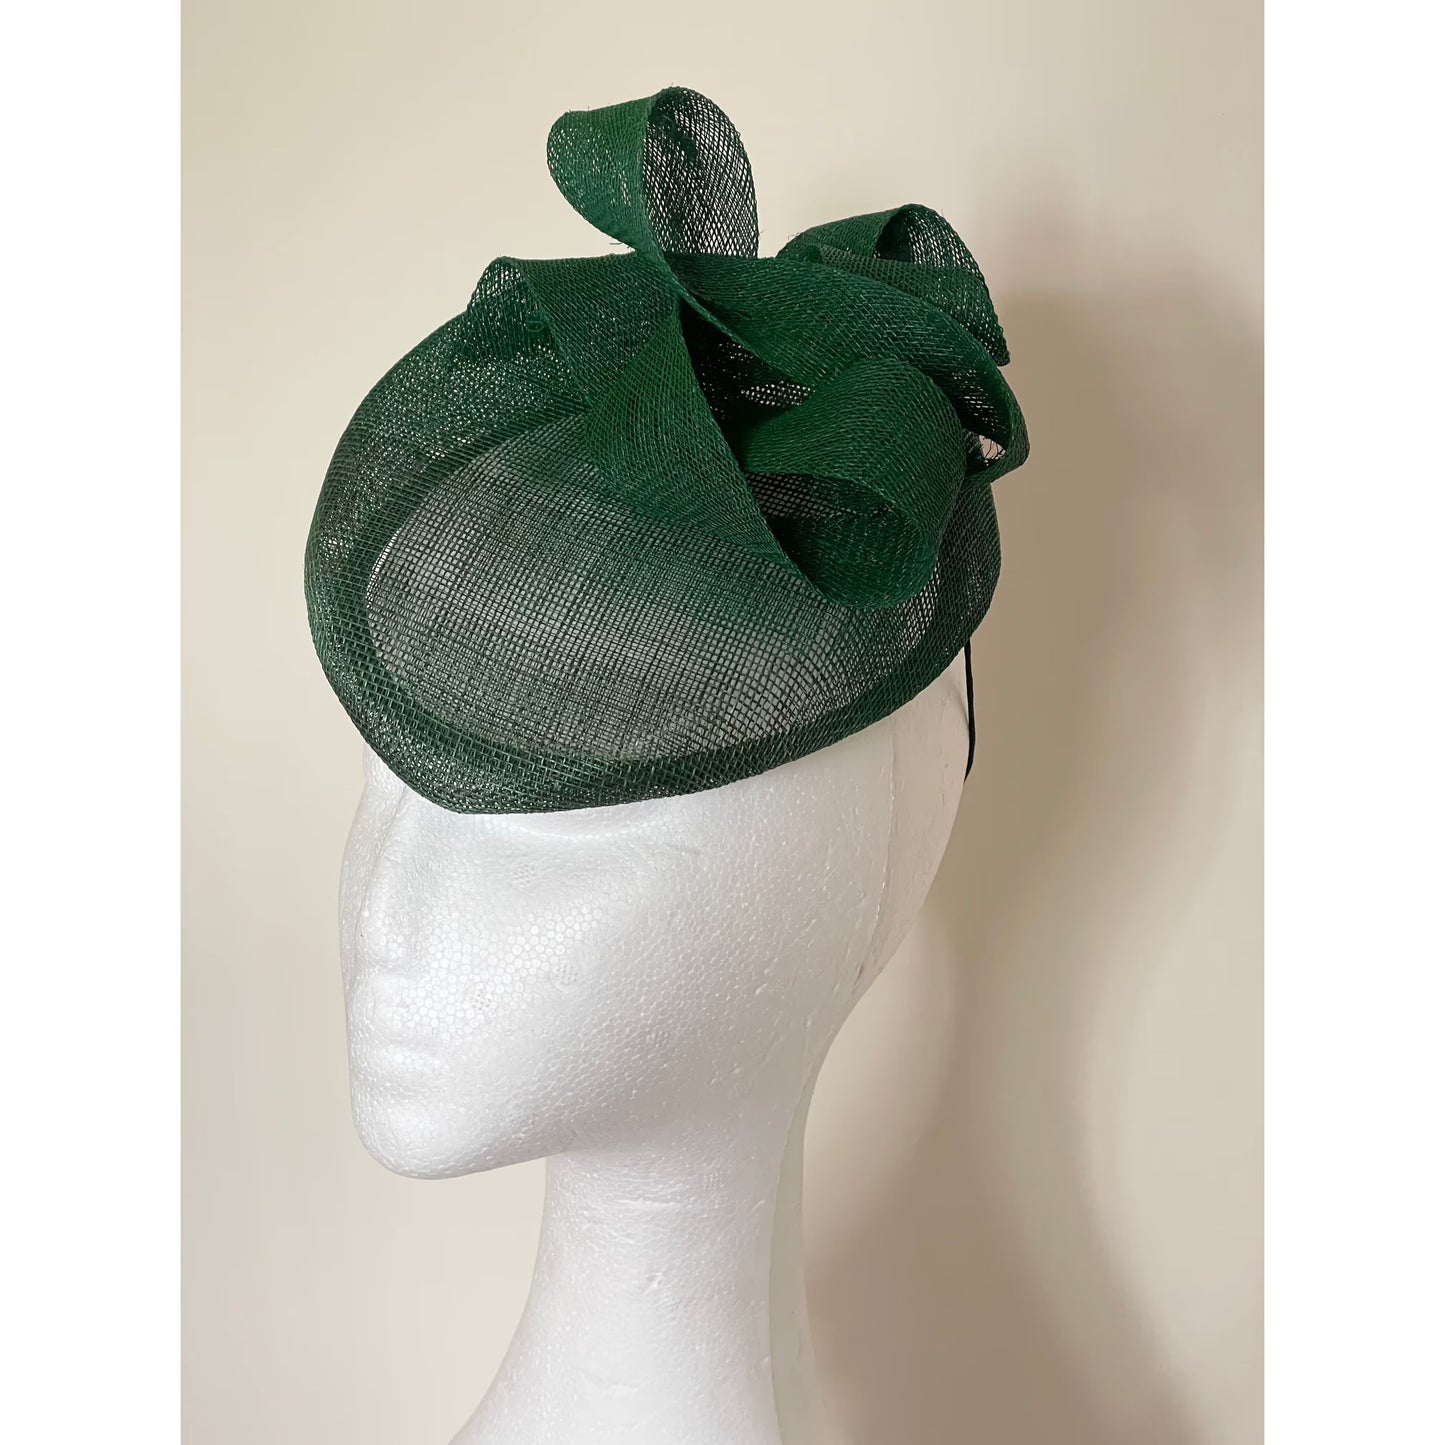 Emerald green swirl headpiece